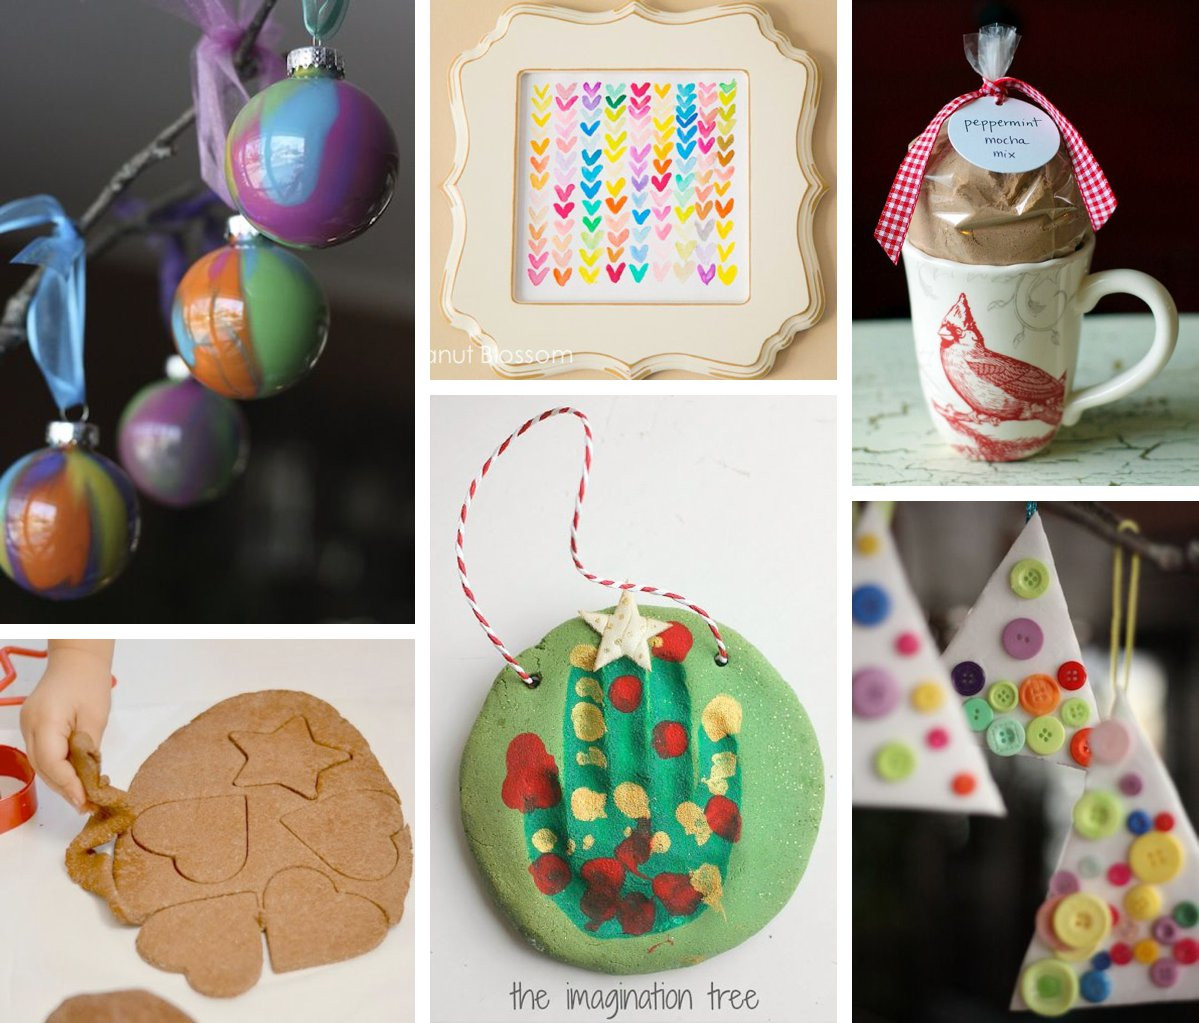 DIY Kids Christmas Gifts
 10 DIY Holiday Gifts Kids Can Help Make